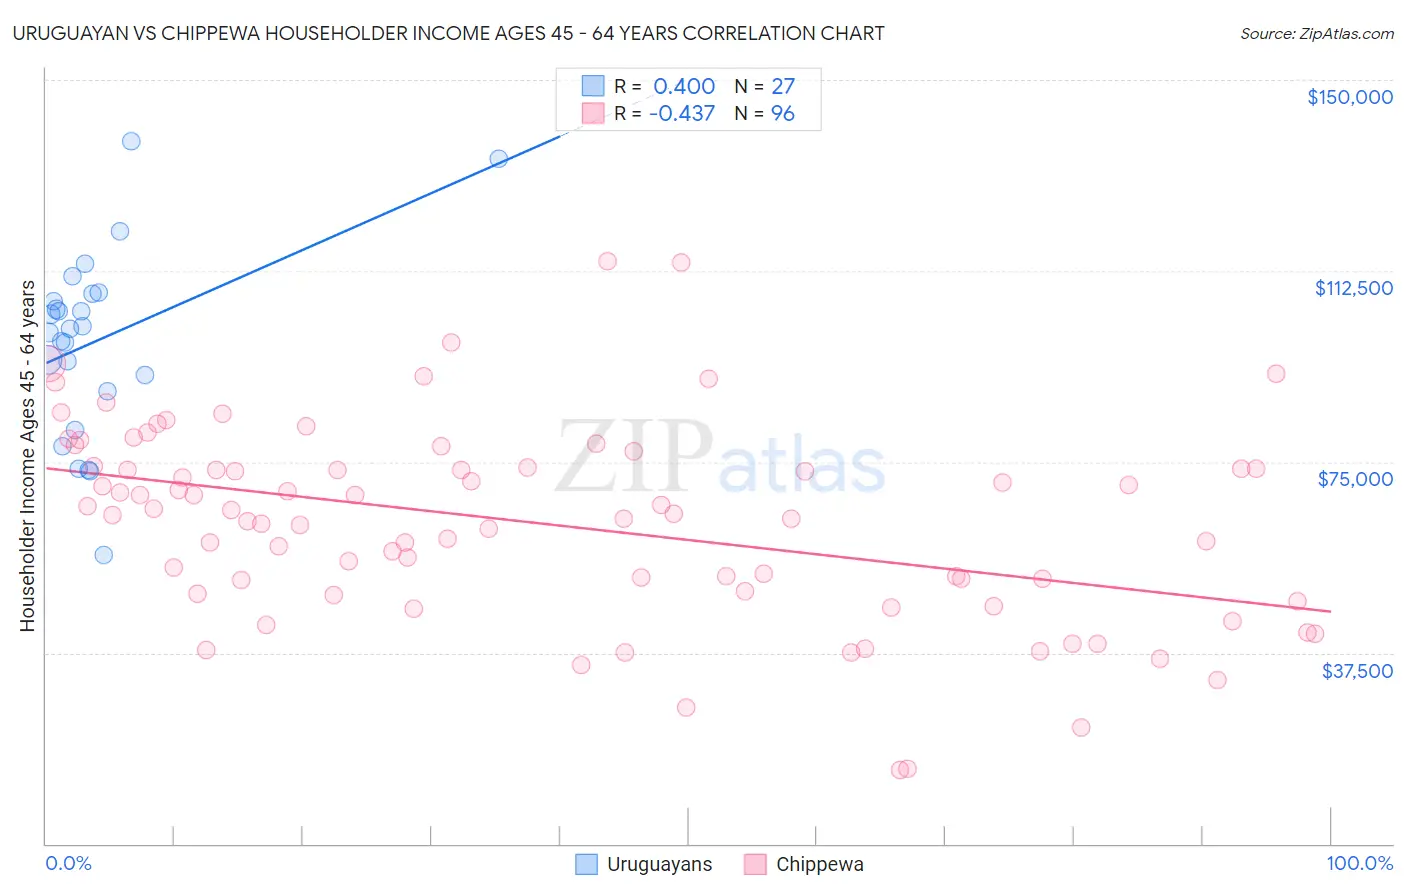 Uruguayan vs Chippewa Householder Income Ages 45 - 64 years